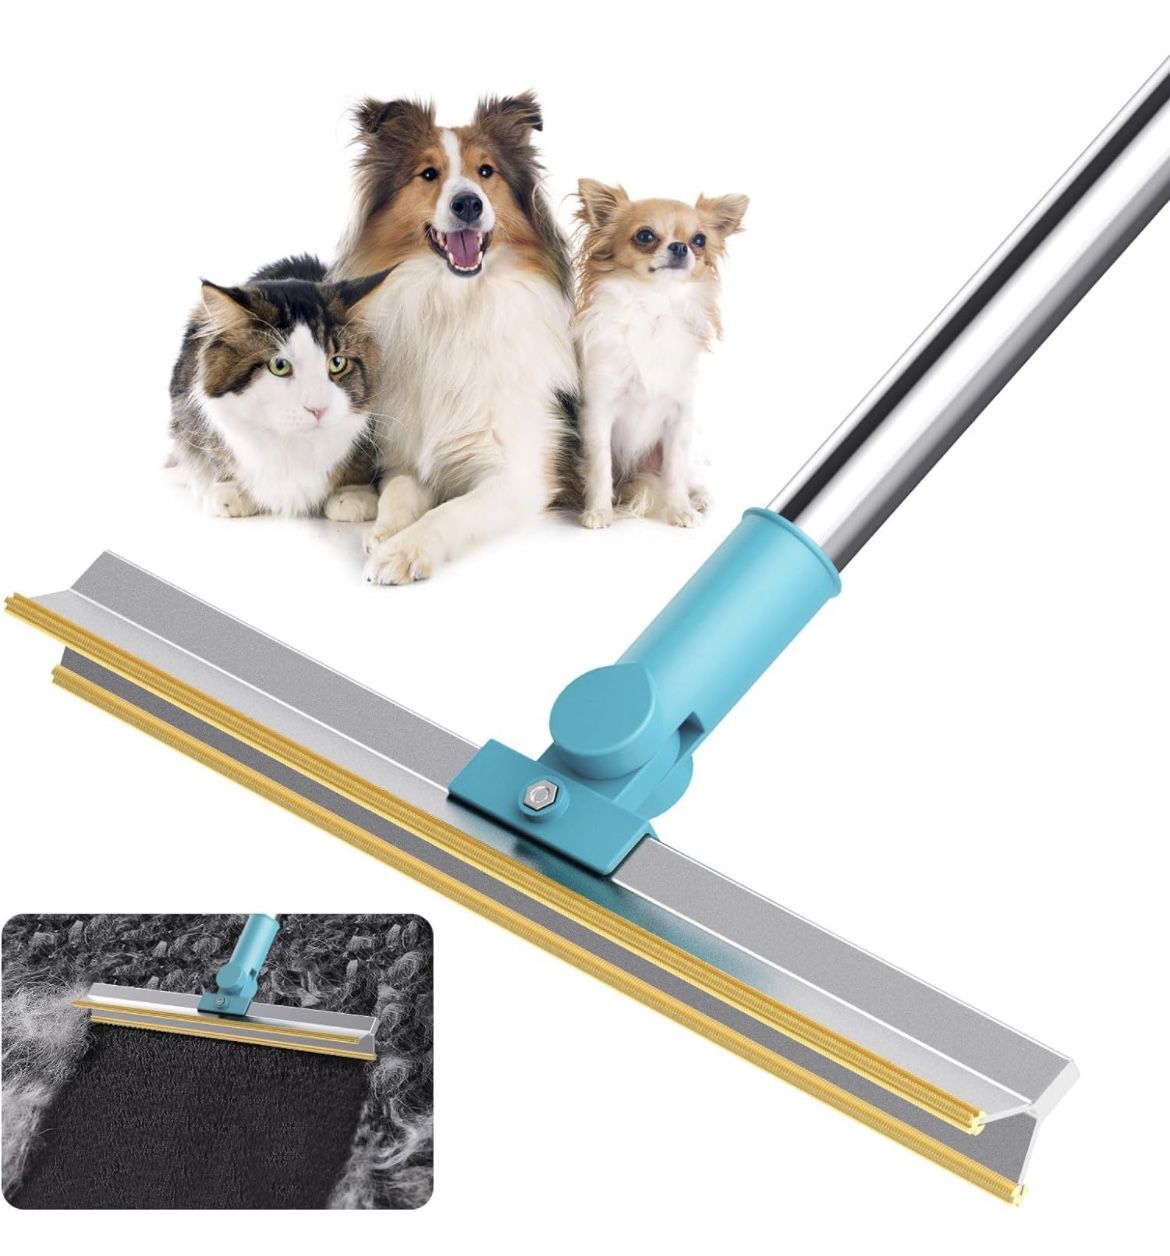 Pet Hair Removal Tool - & Innovative Metal Edge Design - Easy Pet Hair Remover for Carpet